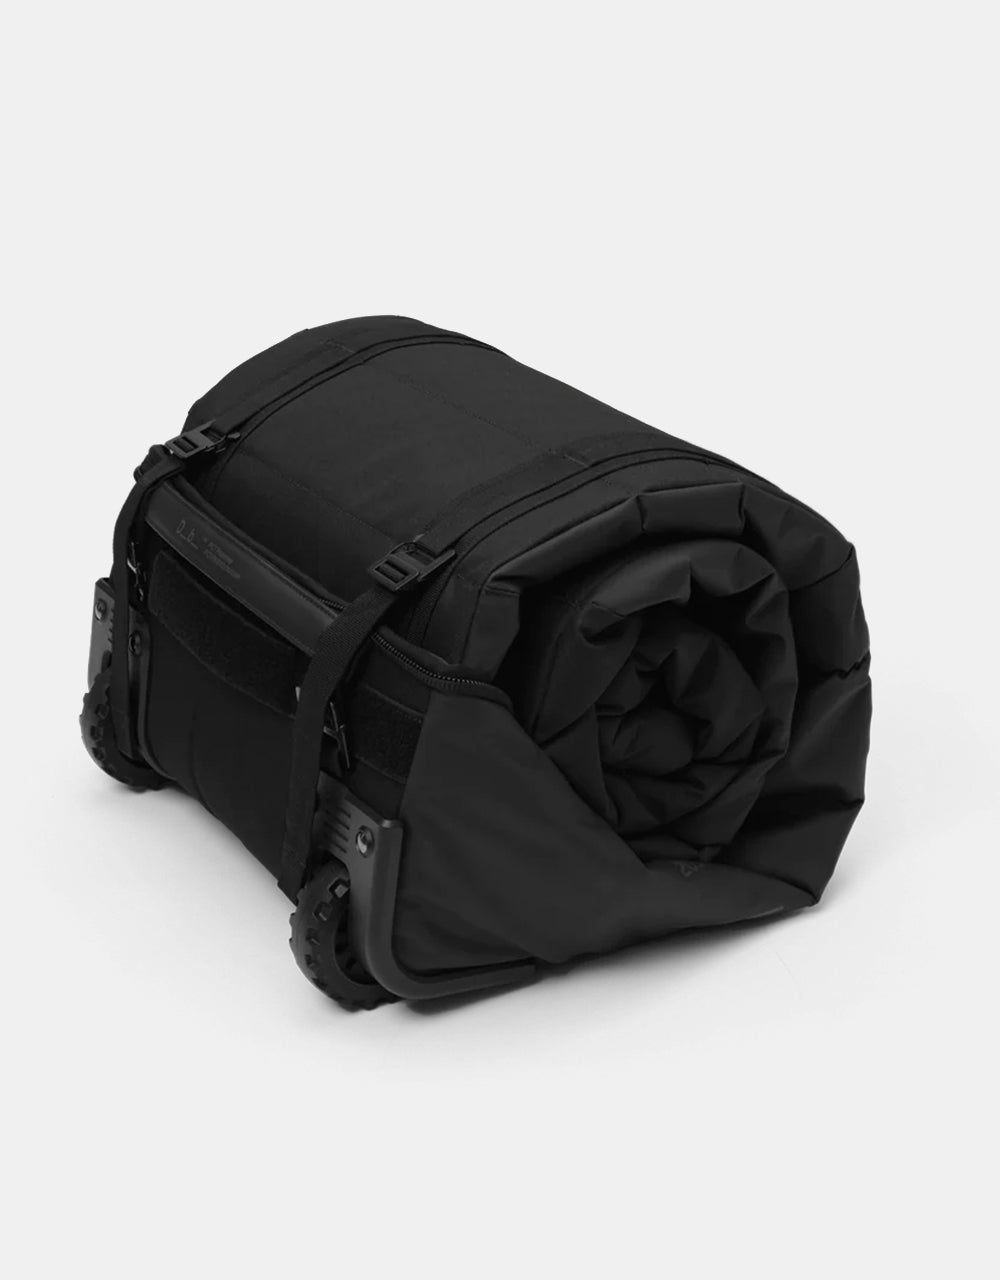 Db Pro Snow Roller Bag - Black Out